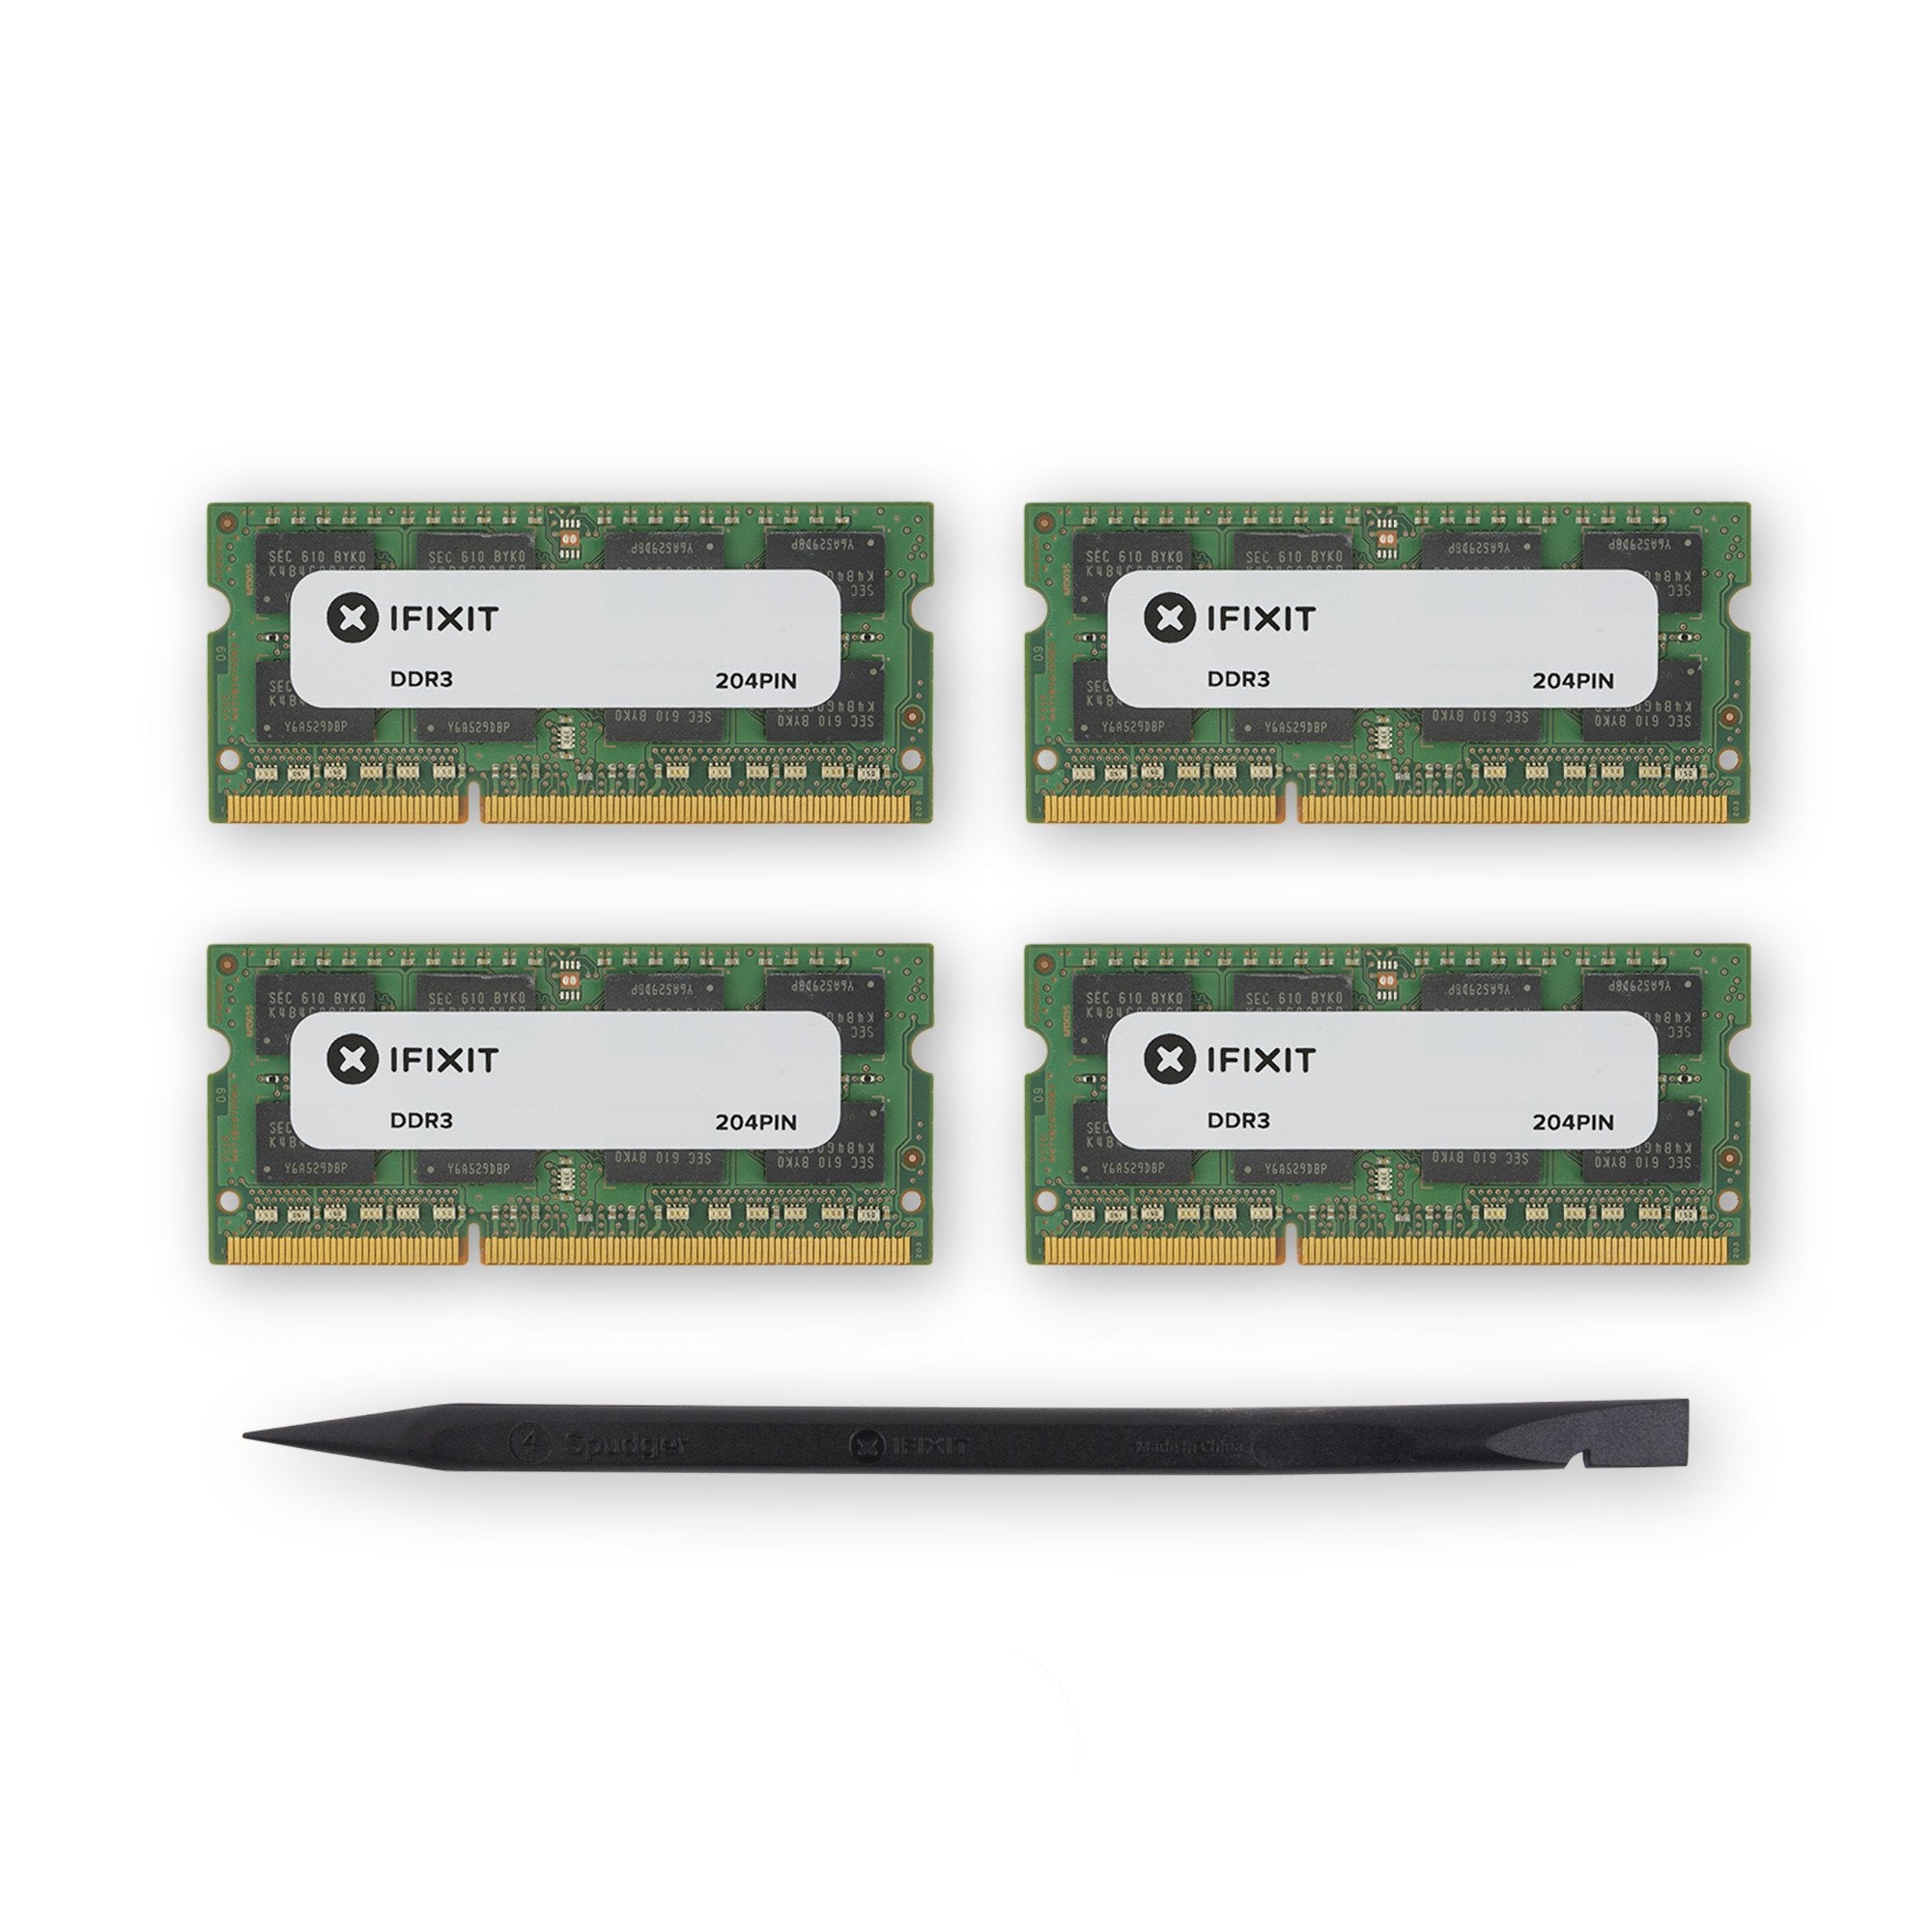 iMac Intel 27" EMC 2806 2014 and Mid 5K Display) Memory RAM Upgrade Kit